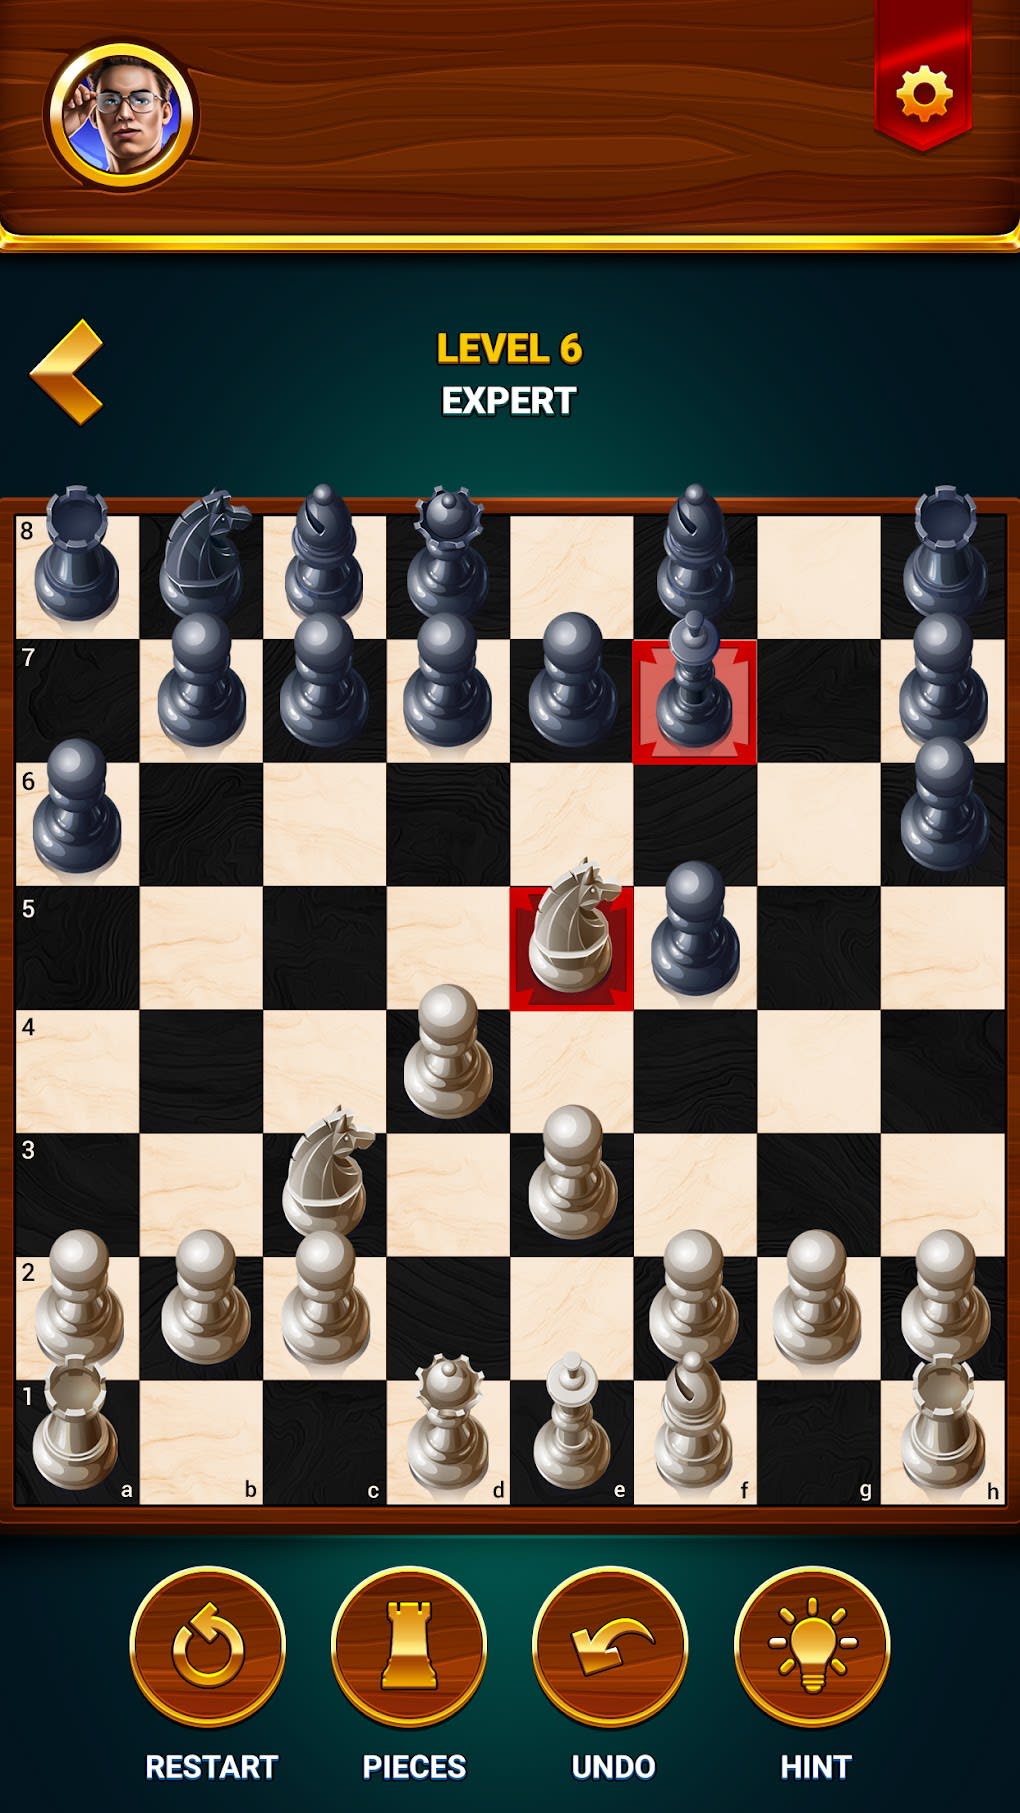 Download do APK de Chess Prince para Android